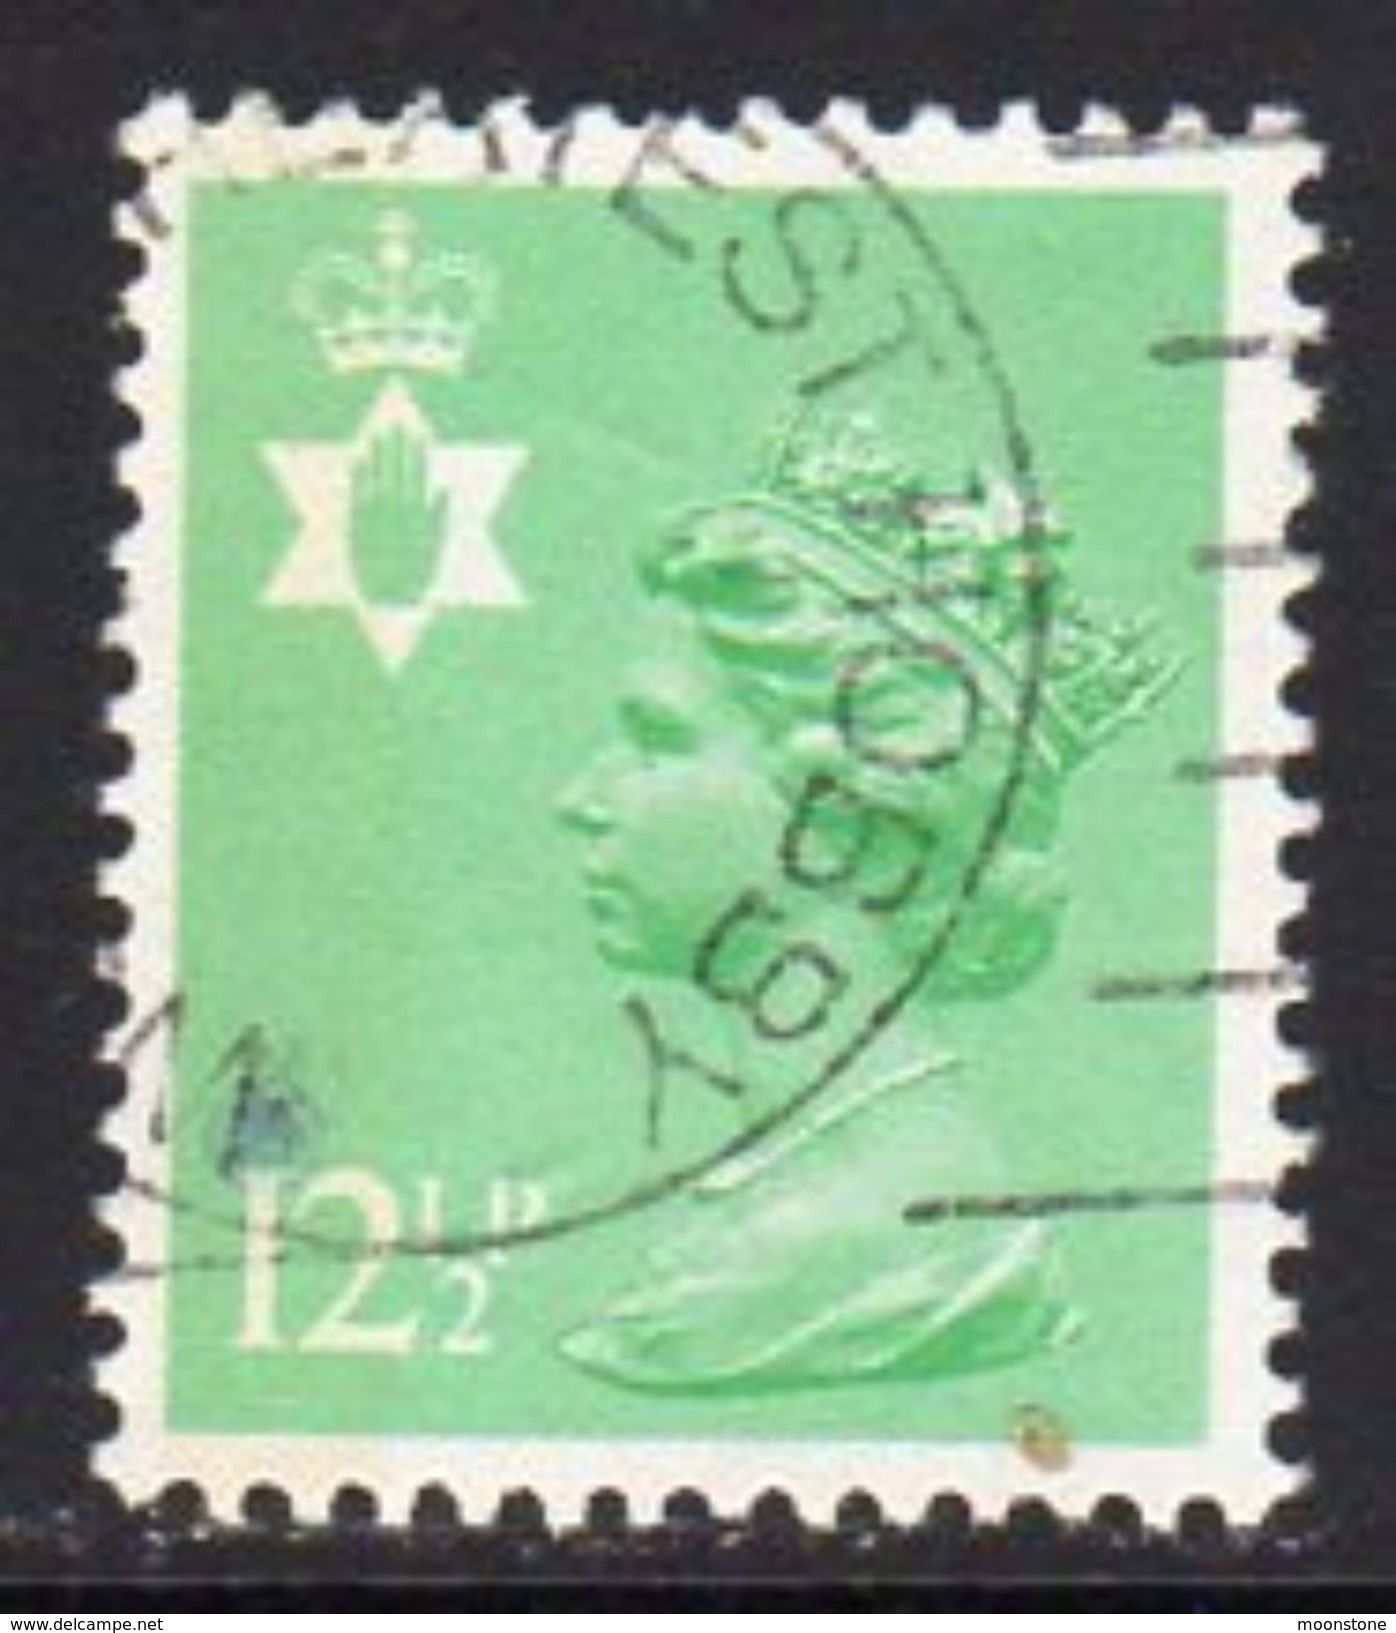 GB N. Ireland 1971-93 12½p Questa Regional Machin, P. 14, Used, SG 36 - Northern Ireland